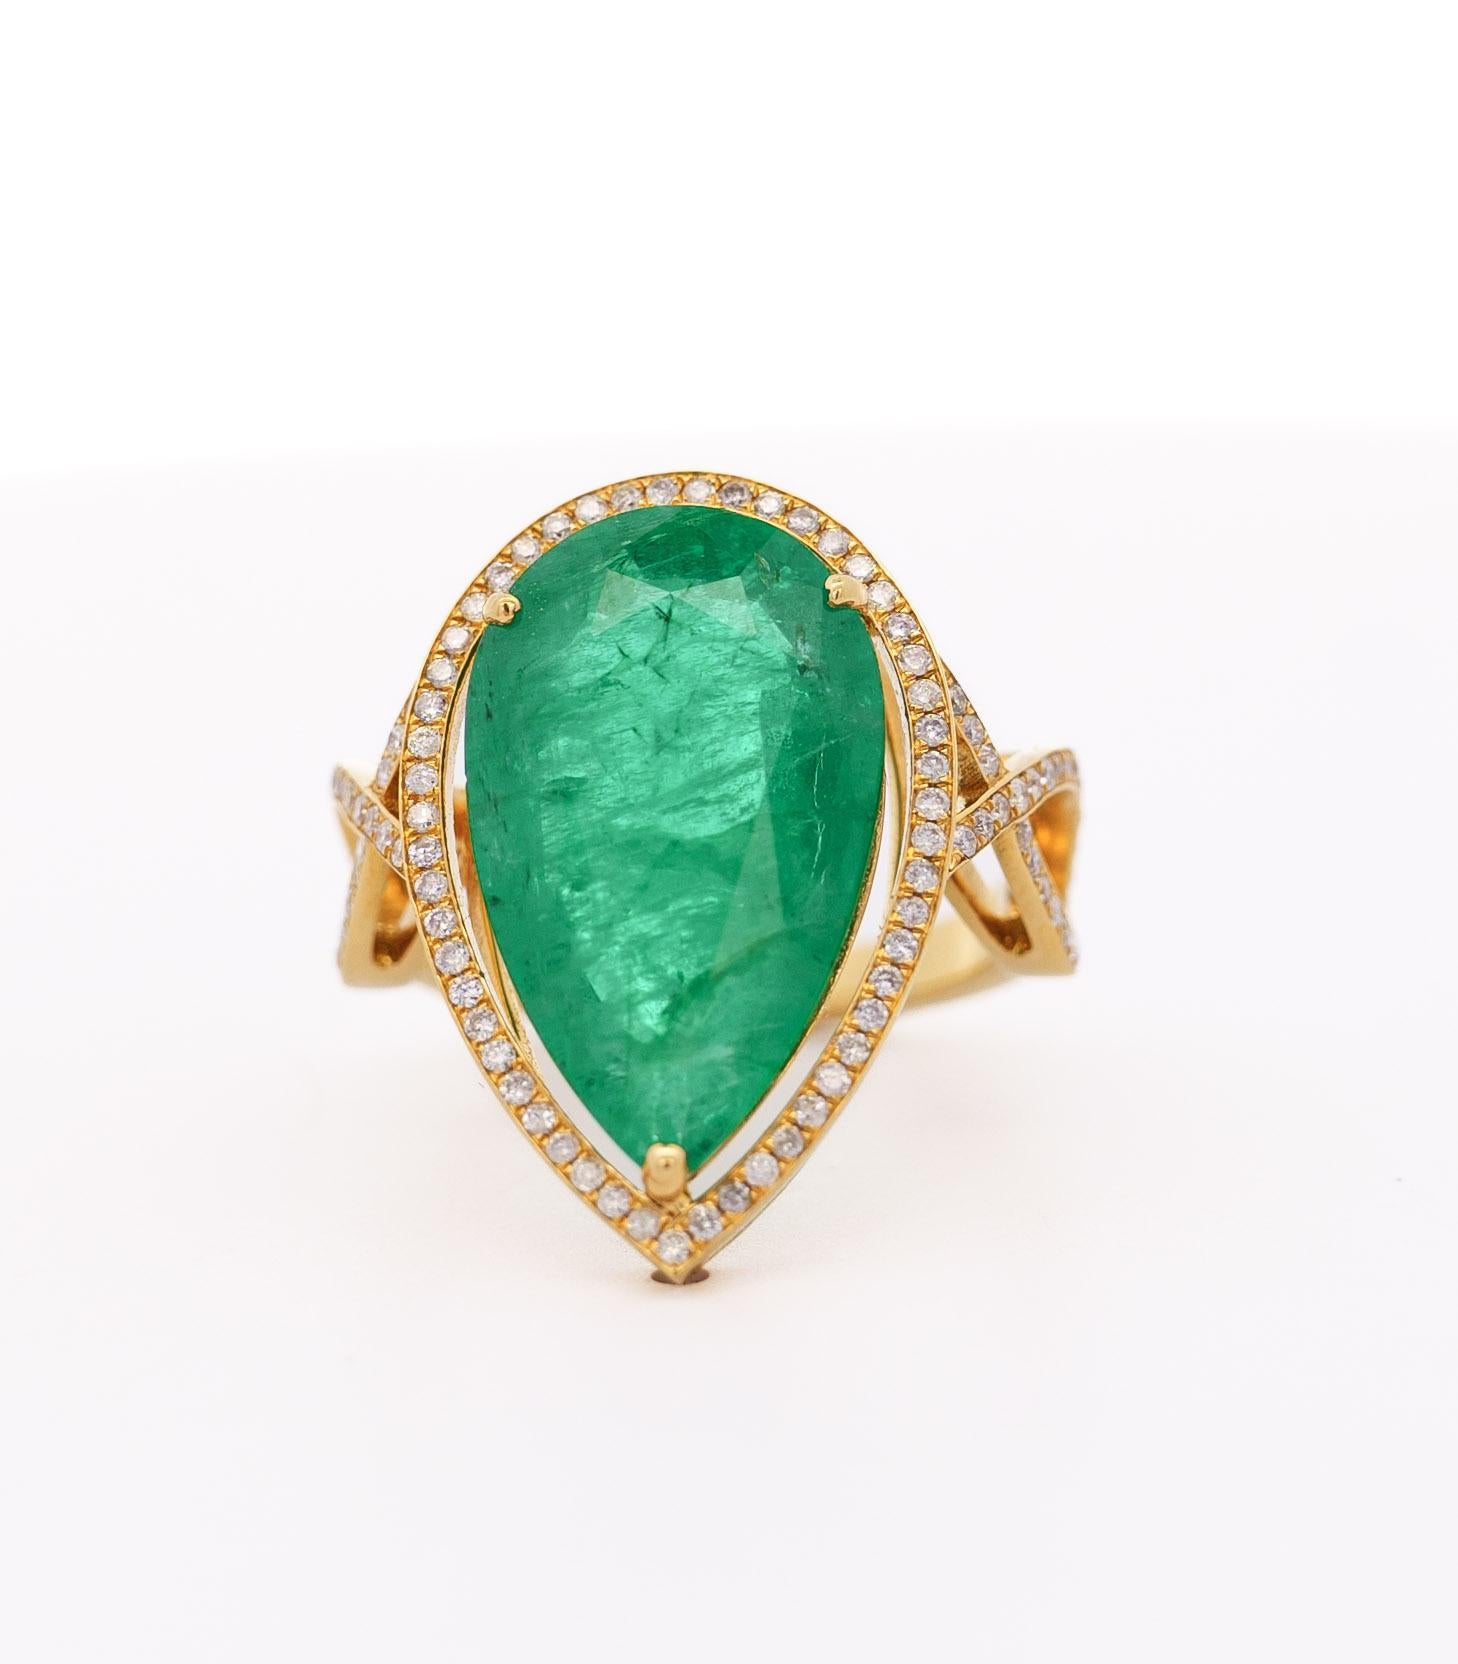 Vintage 9 Carat Pear Cut Zambian Emerald & Diamond Halo Ring Jacket in 18K Gold For Sale 5